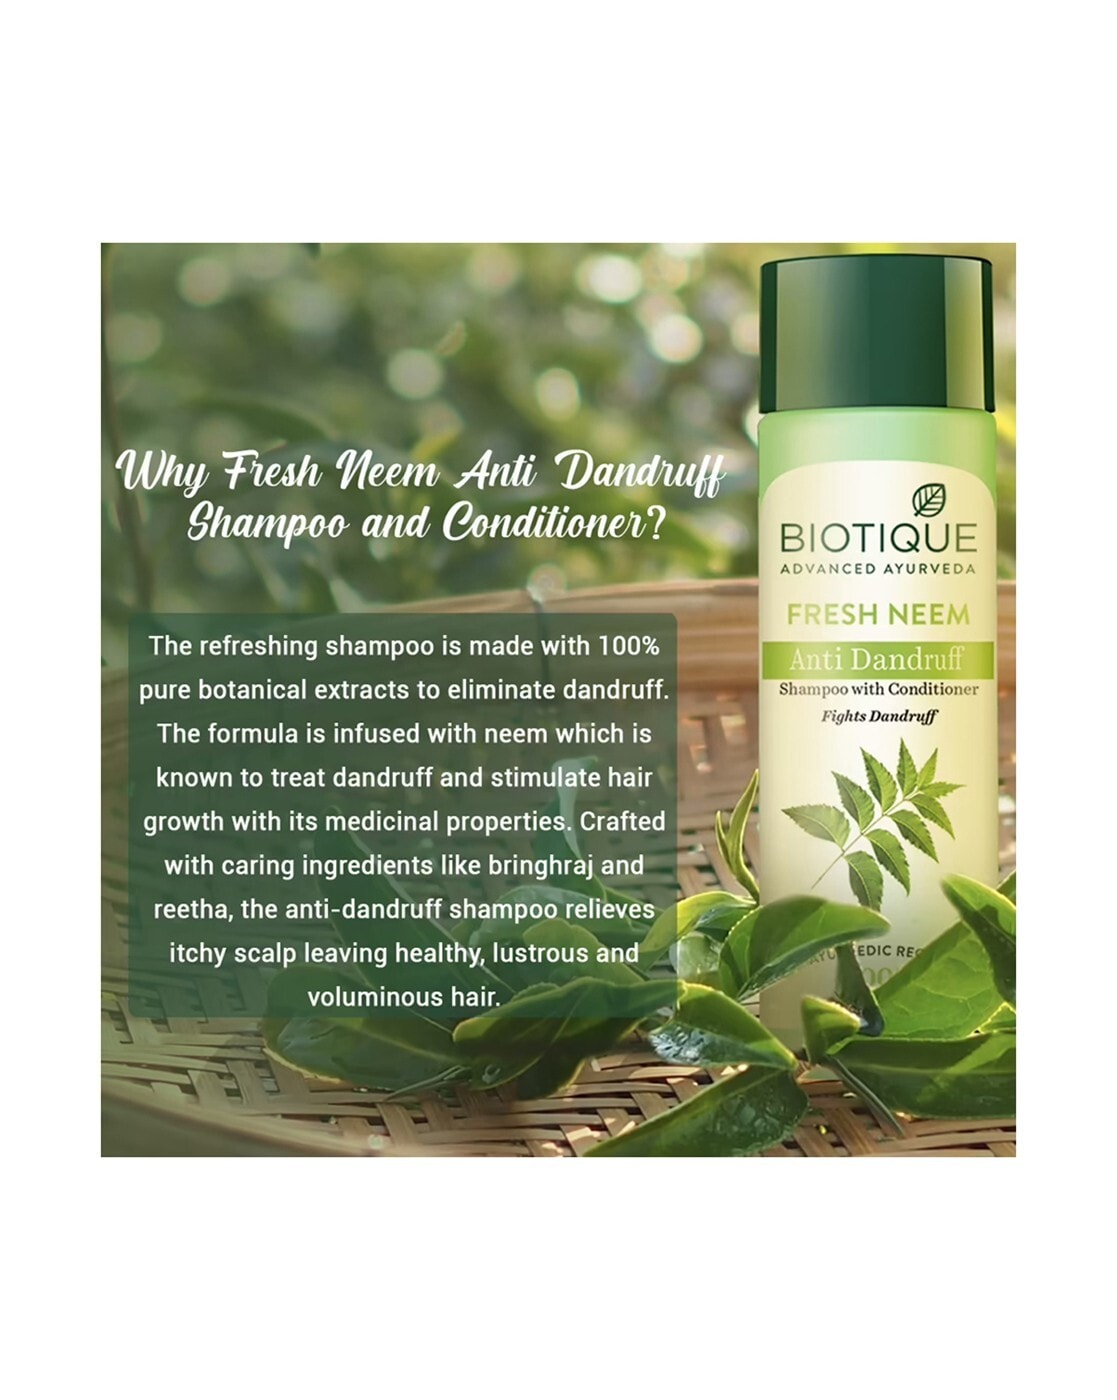 Share more than 145 biotique shampoo for hair growth super hot - camera ...